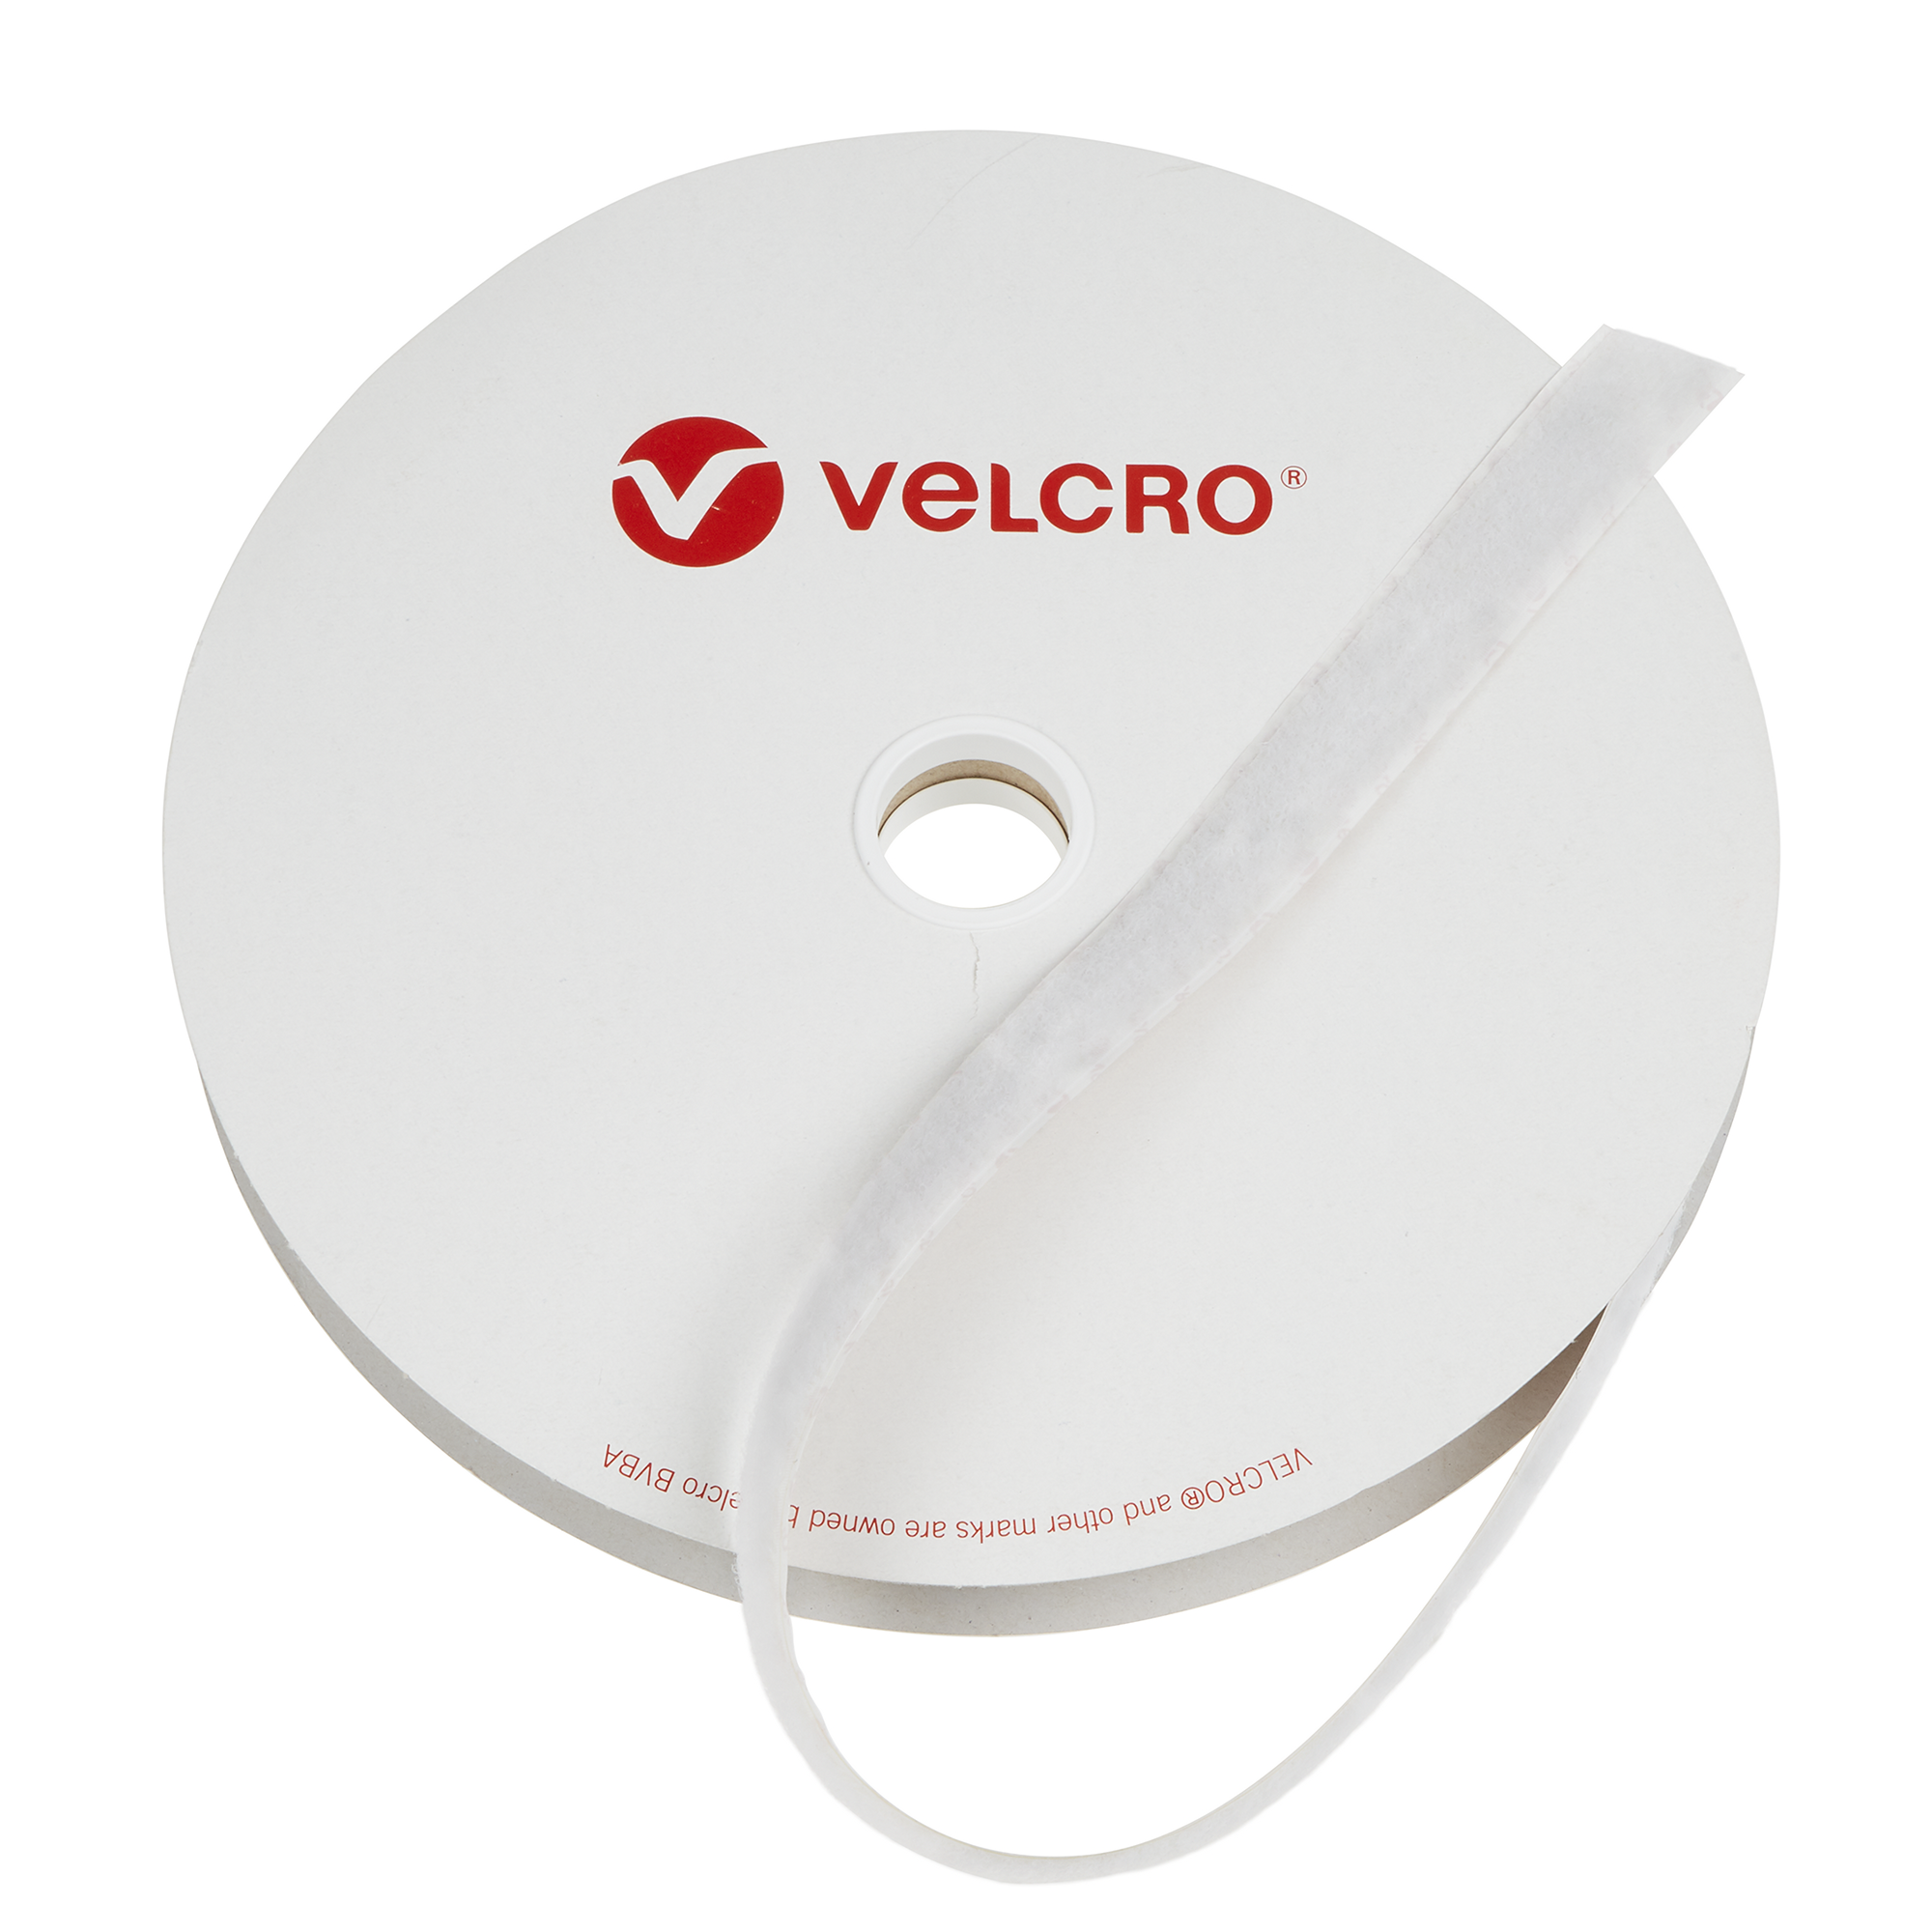 Velcro Brand Adhesive Loop Tape White